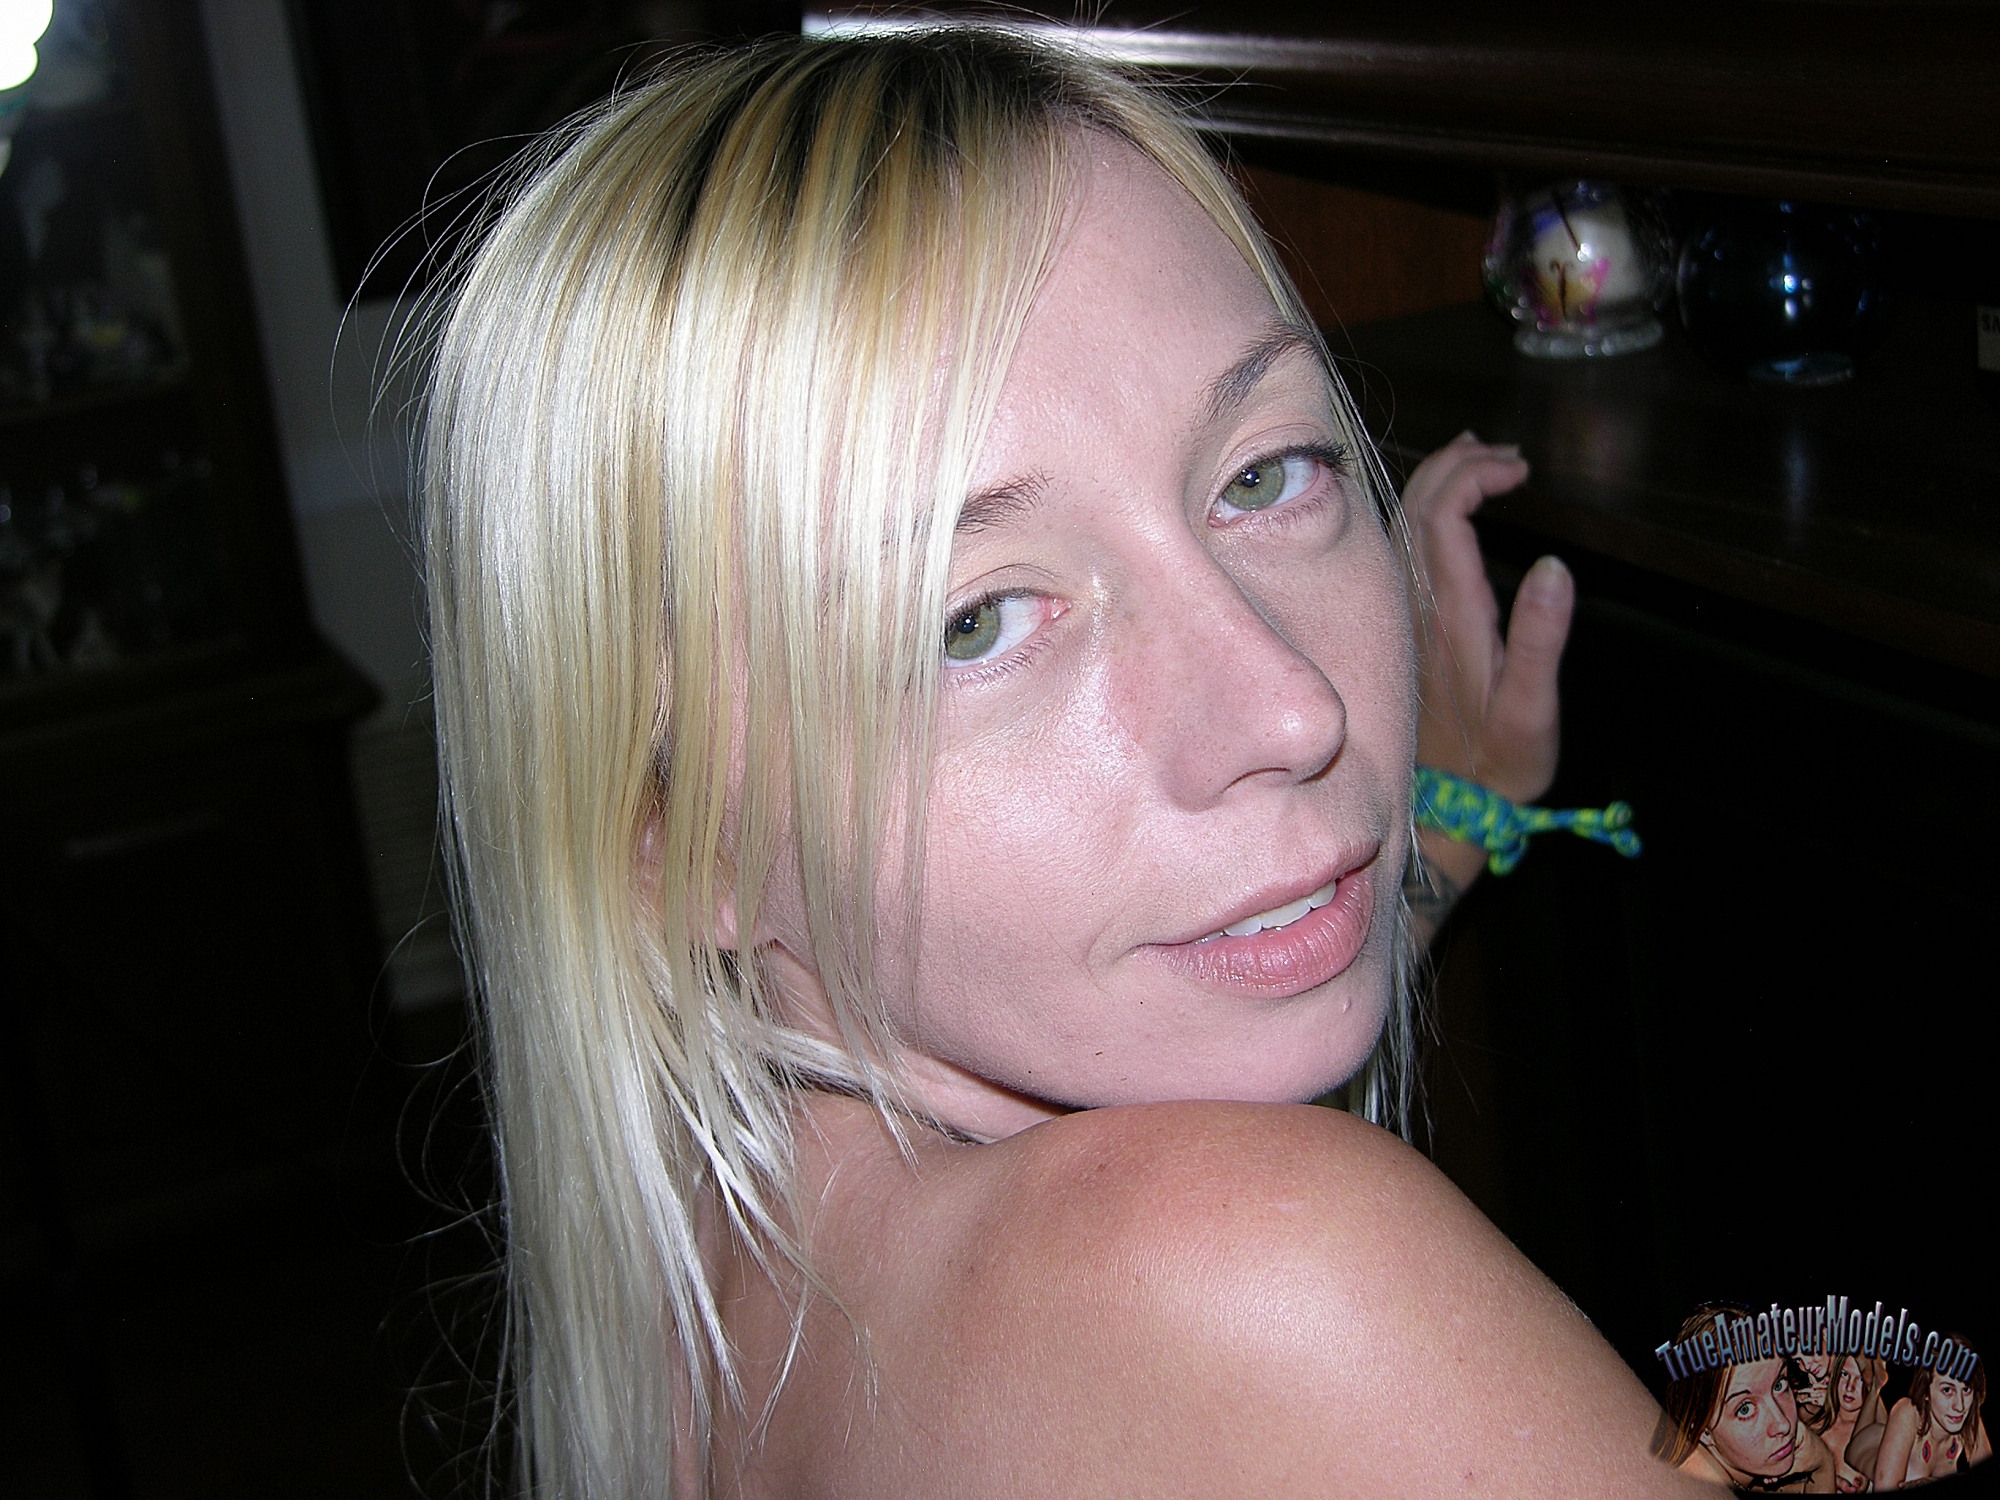 wpid-amateur-mature-blonde-woman-spreading-nude6.jpg